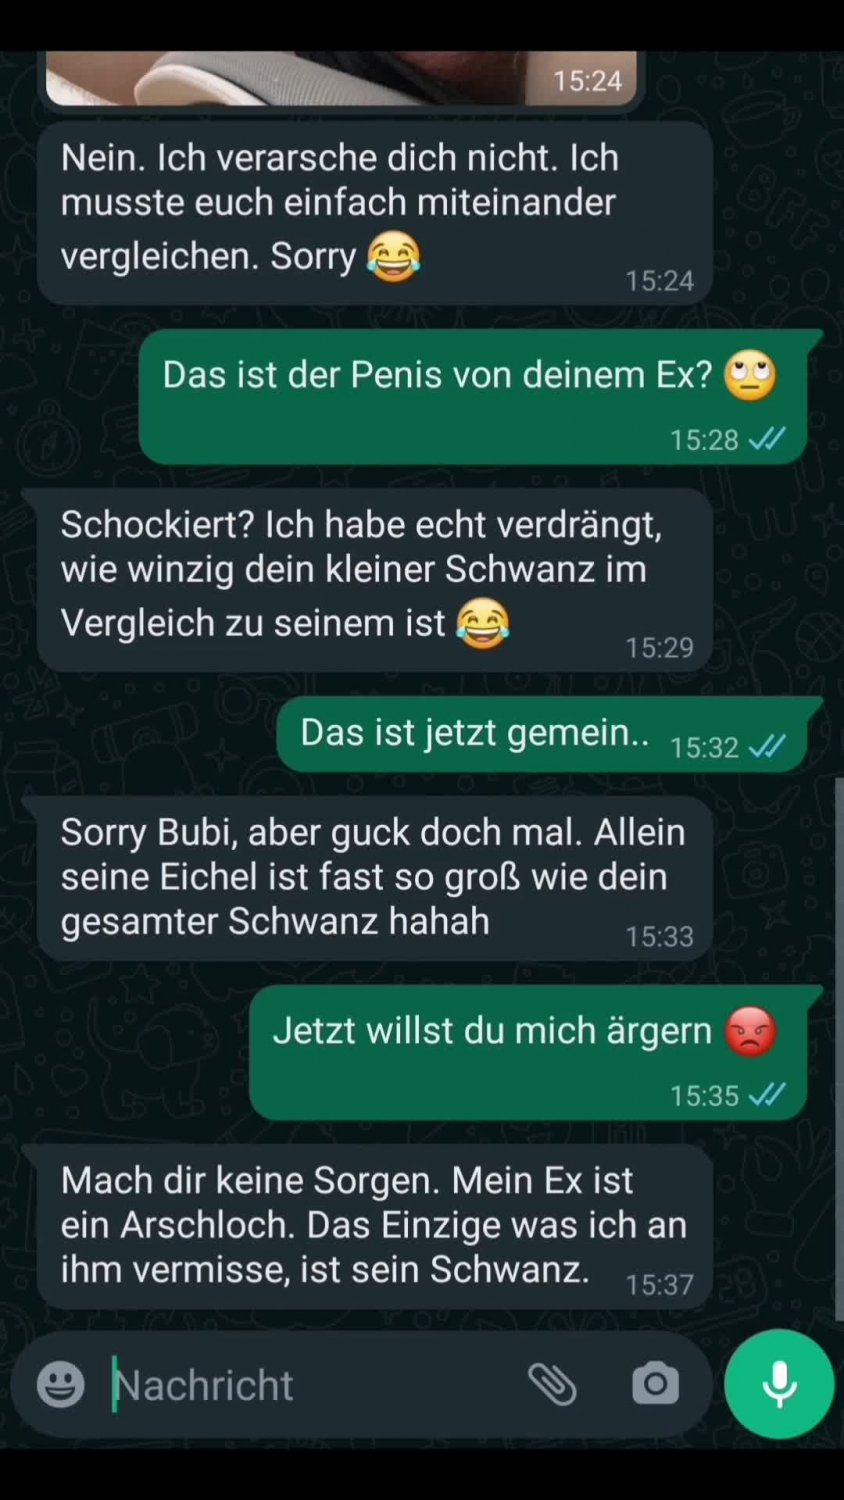 Small penis humiliation WhatsApp Chat (German) photo